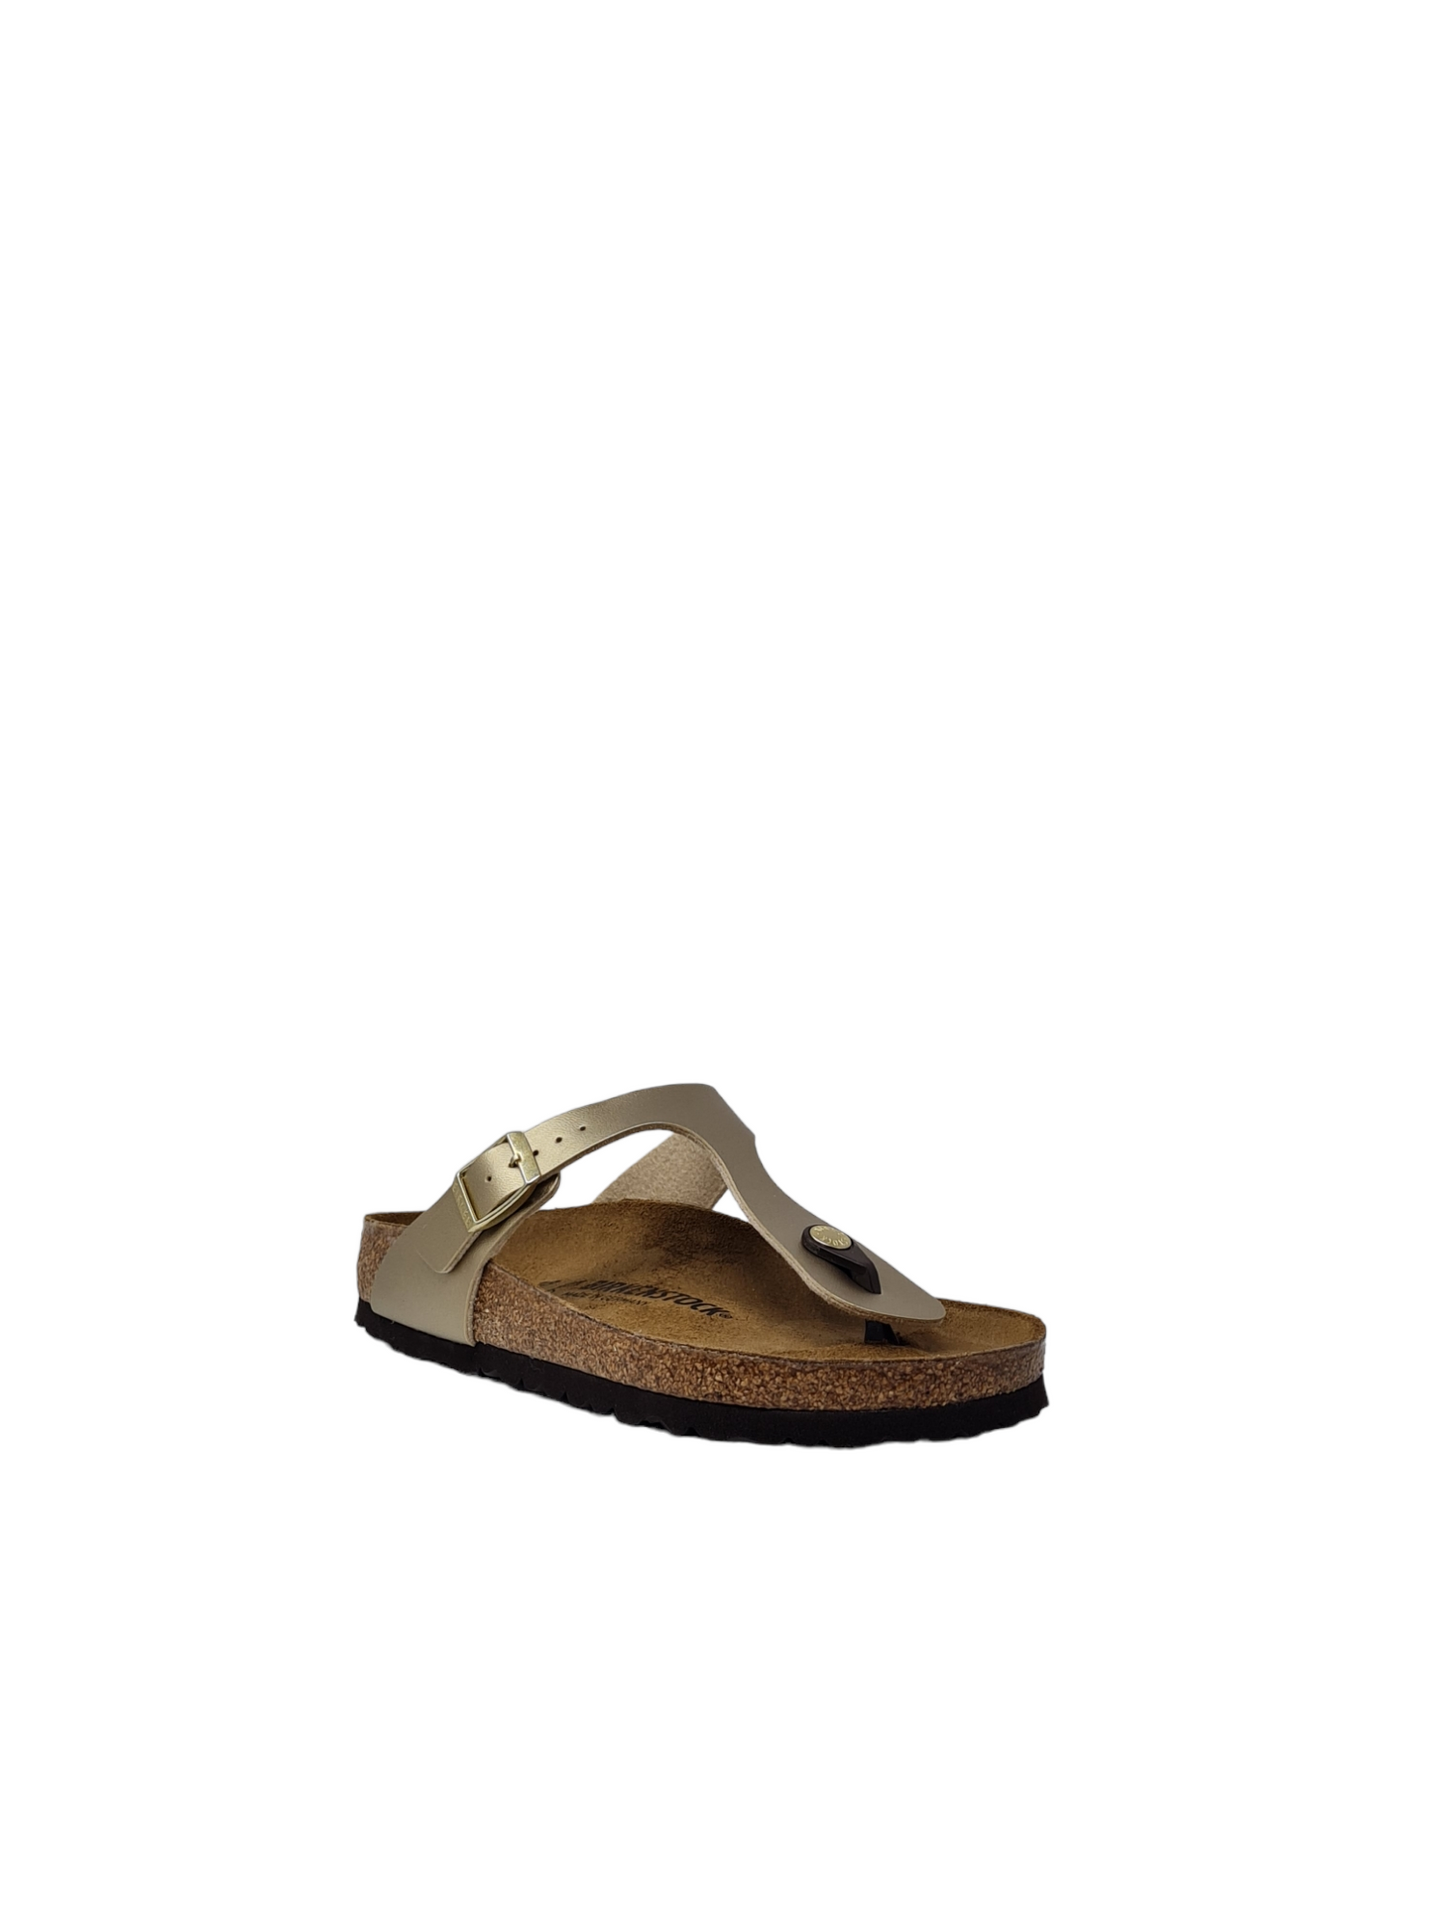 Flip-flop sandal 1016108